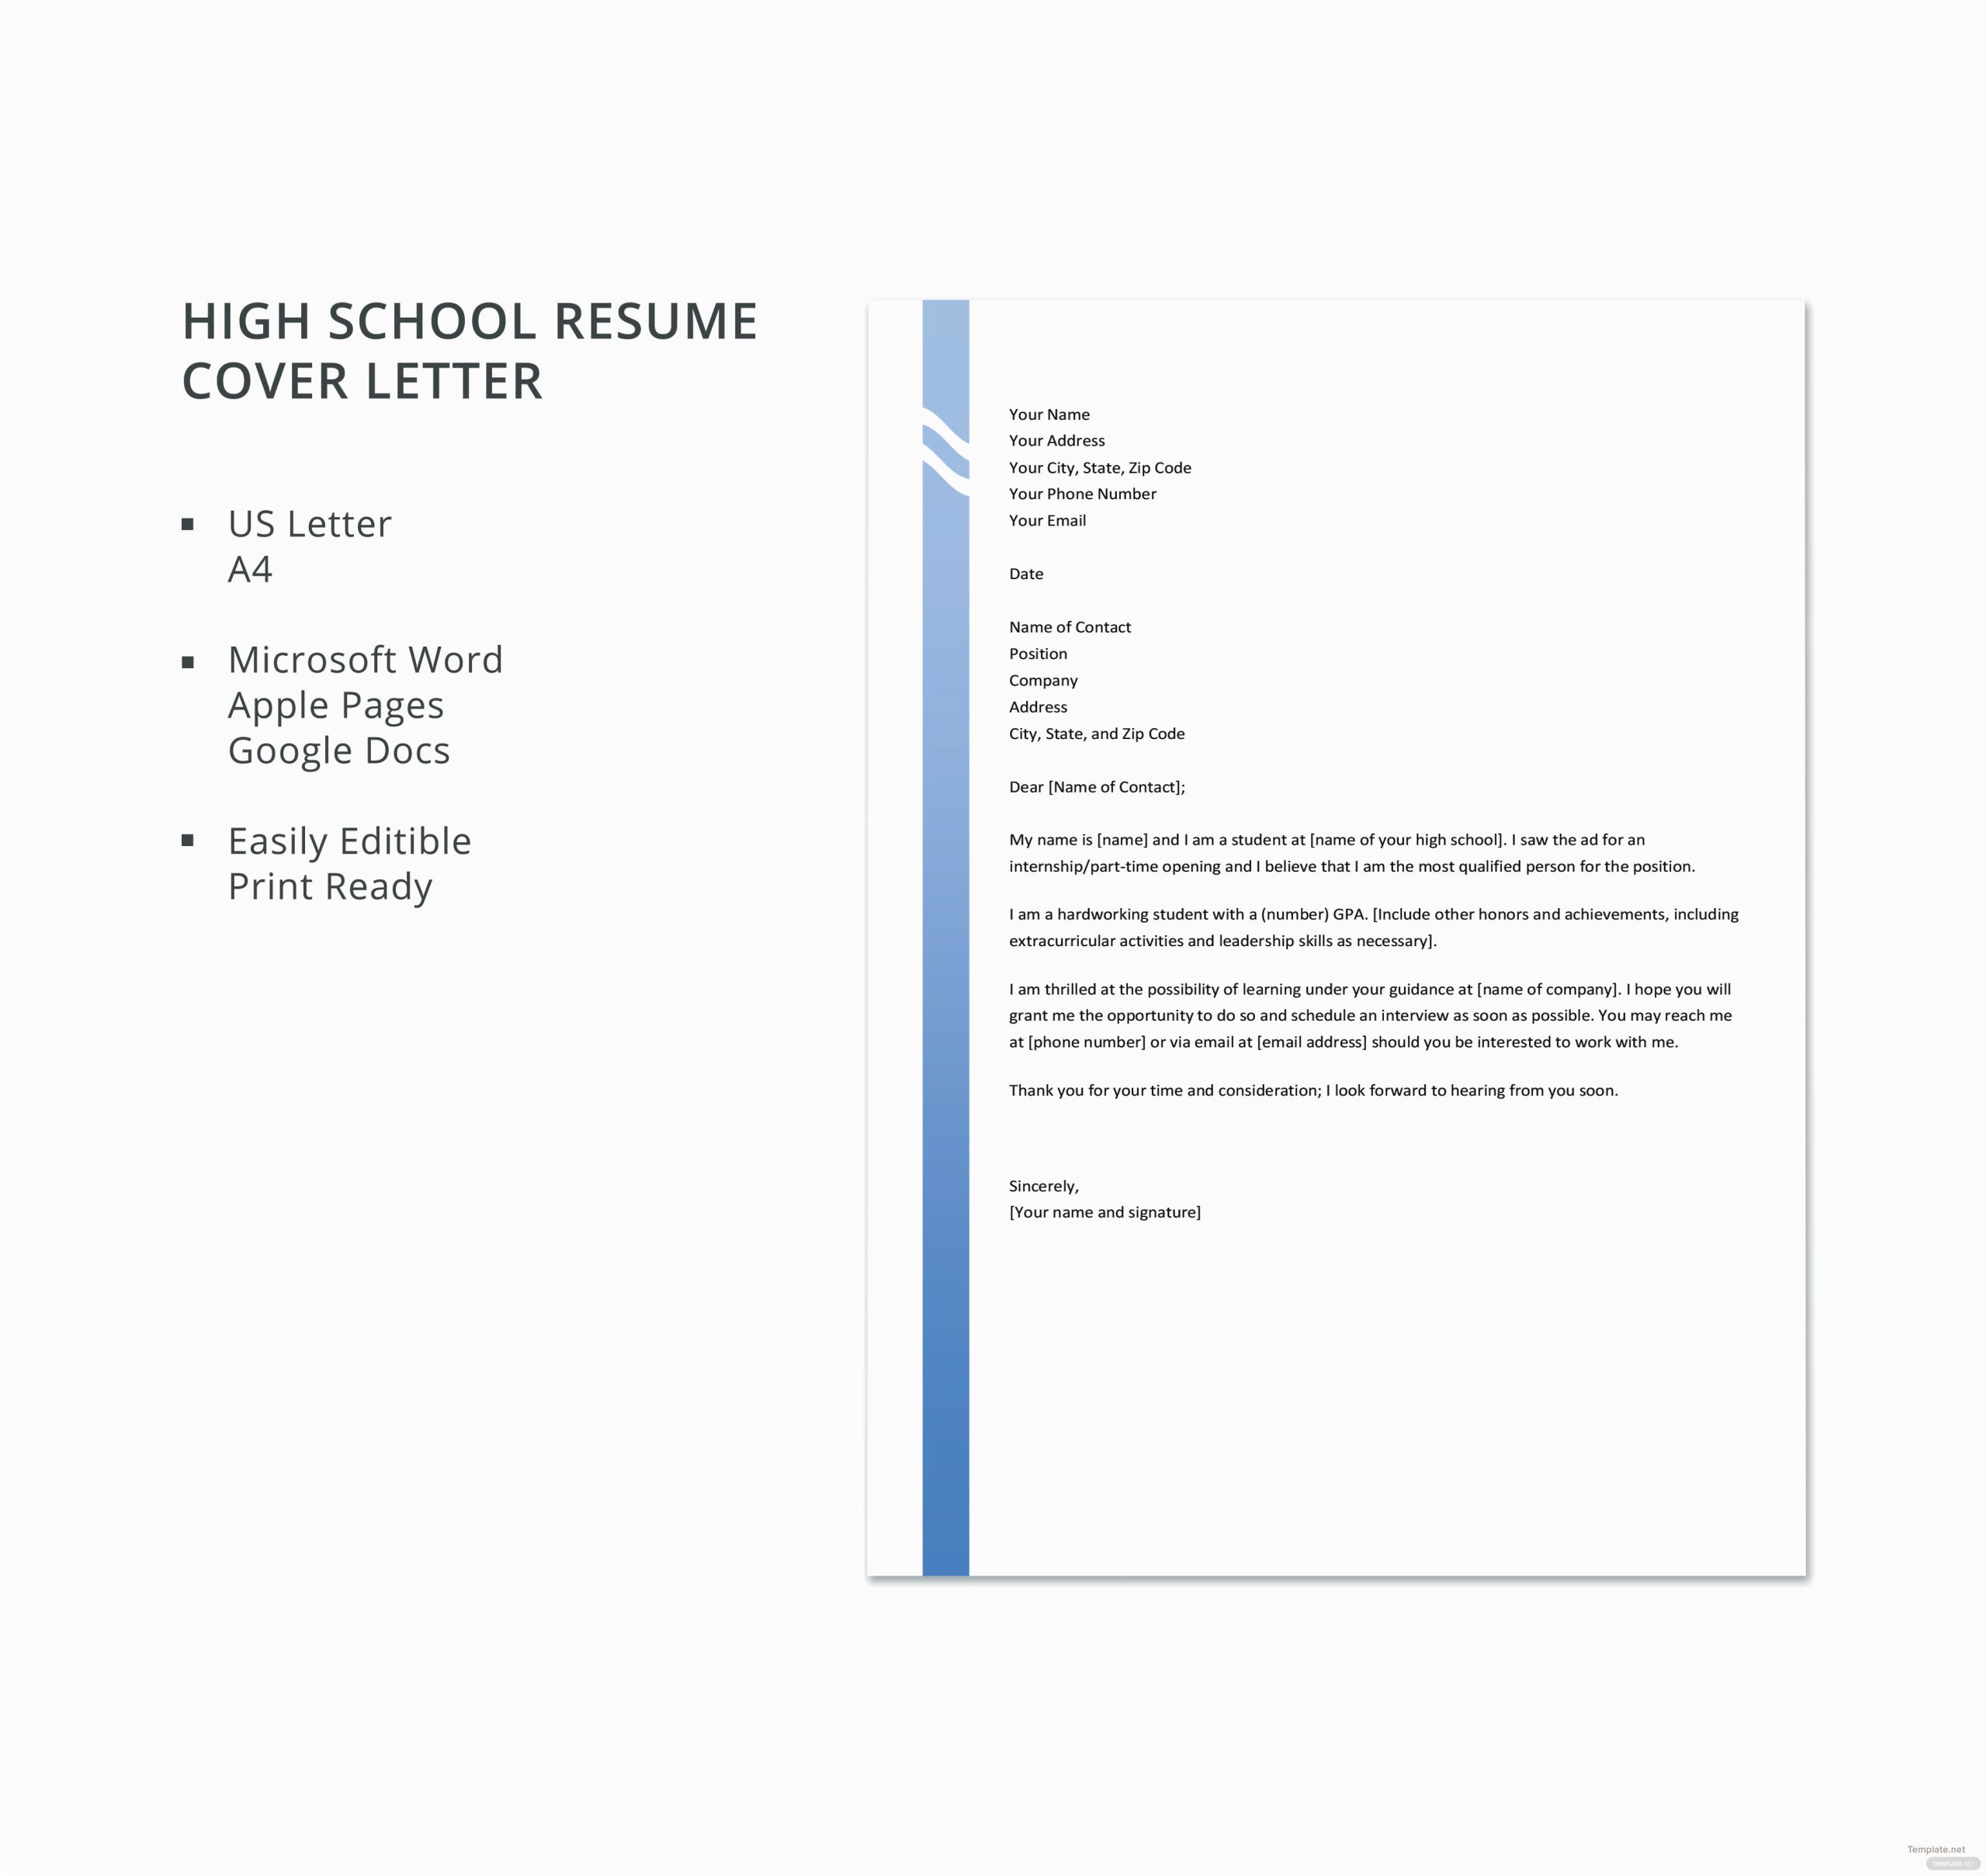 Sample Resume Cover Letter for High School Students Free High School Resume Cover Letter Template In Microsoft Word Apple